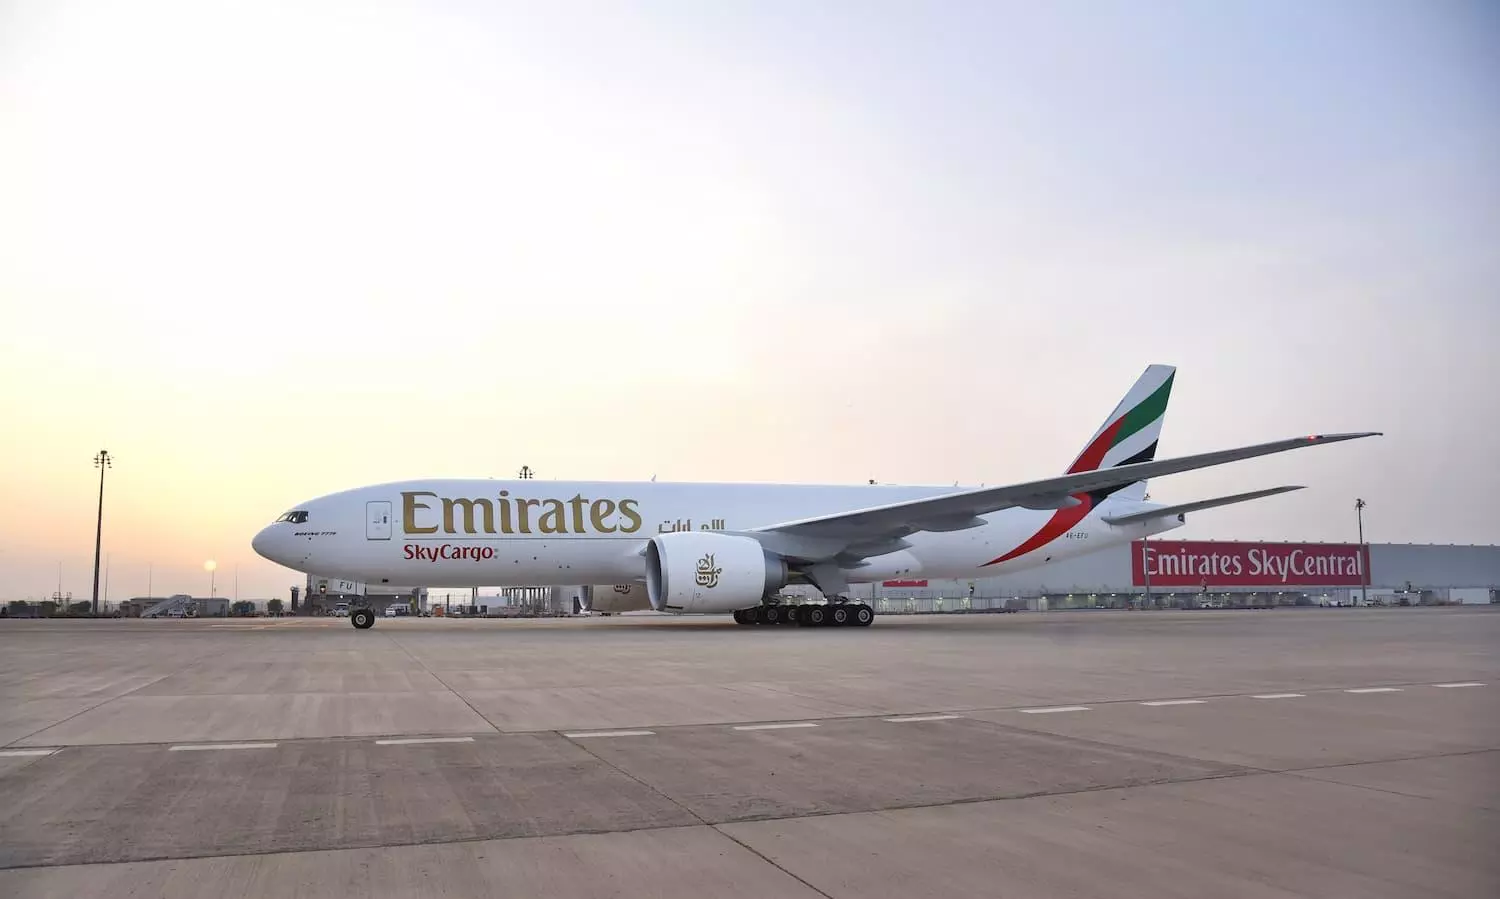 Emirates SkyCargo to double capacity in next decade